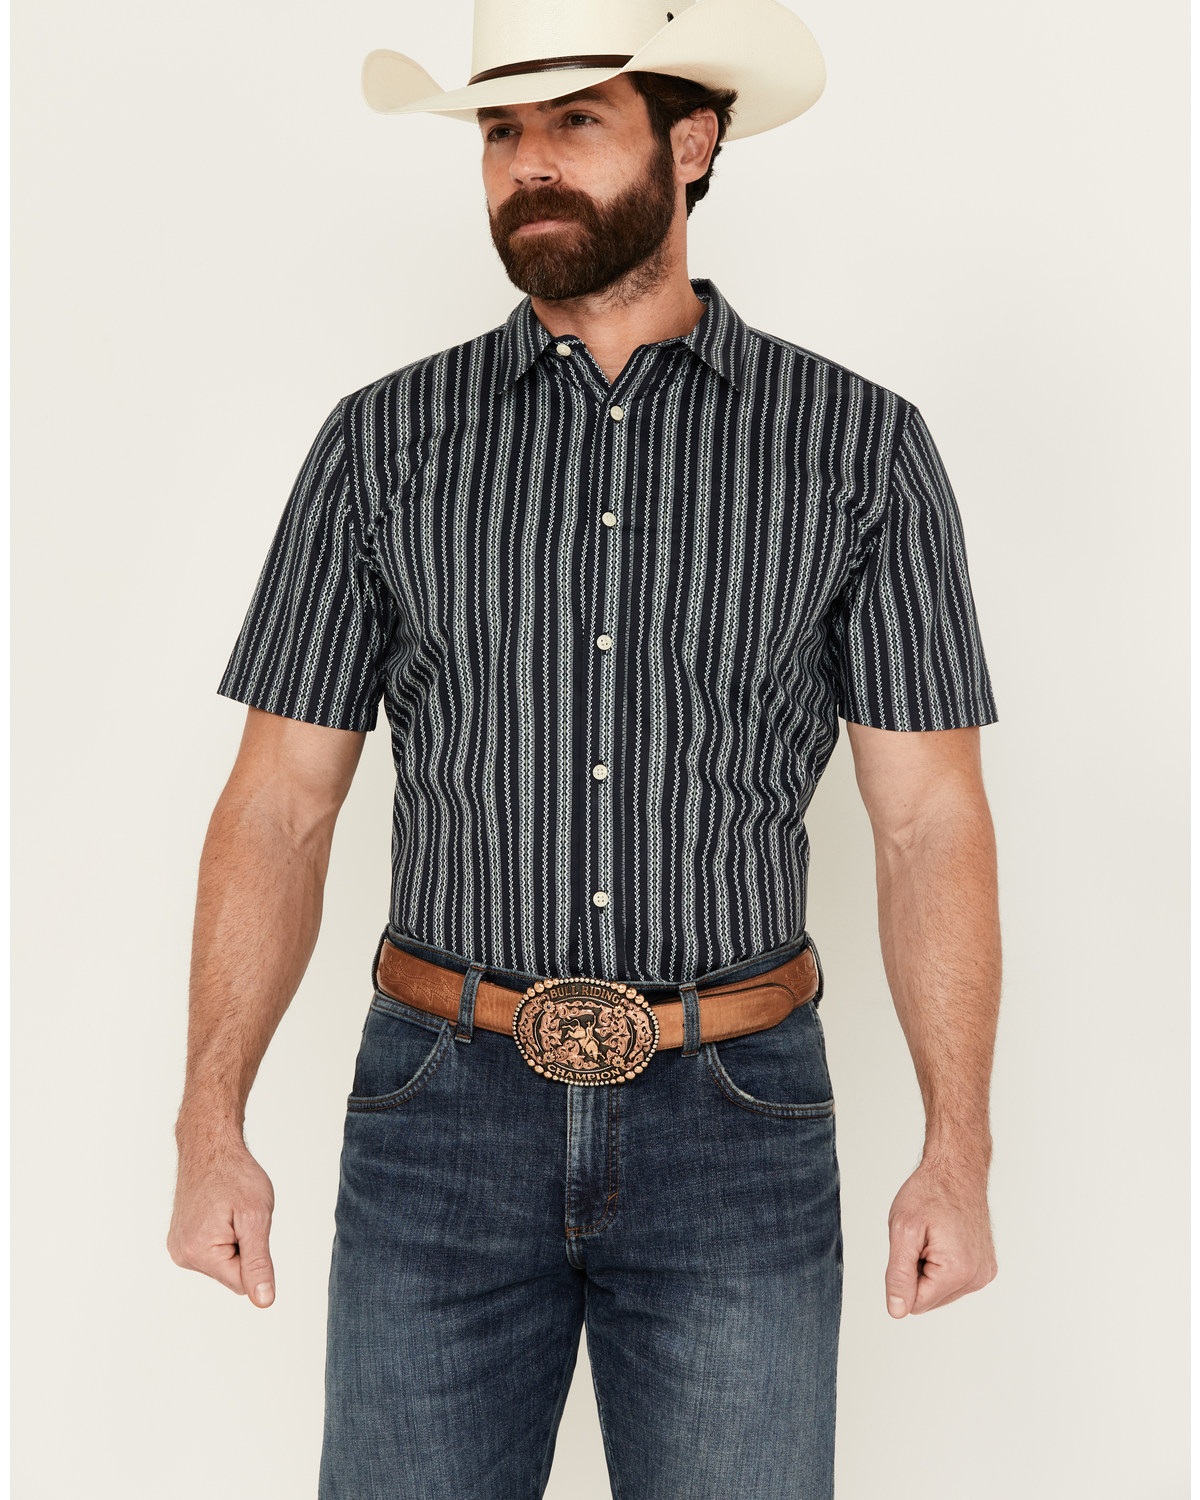 Gibson Trading Co Men's Scratch Stripe Short Sleeve Button-Down Western Shirt